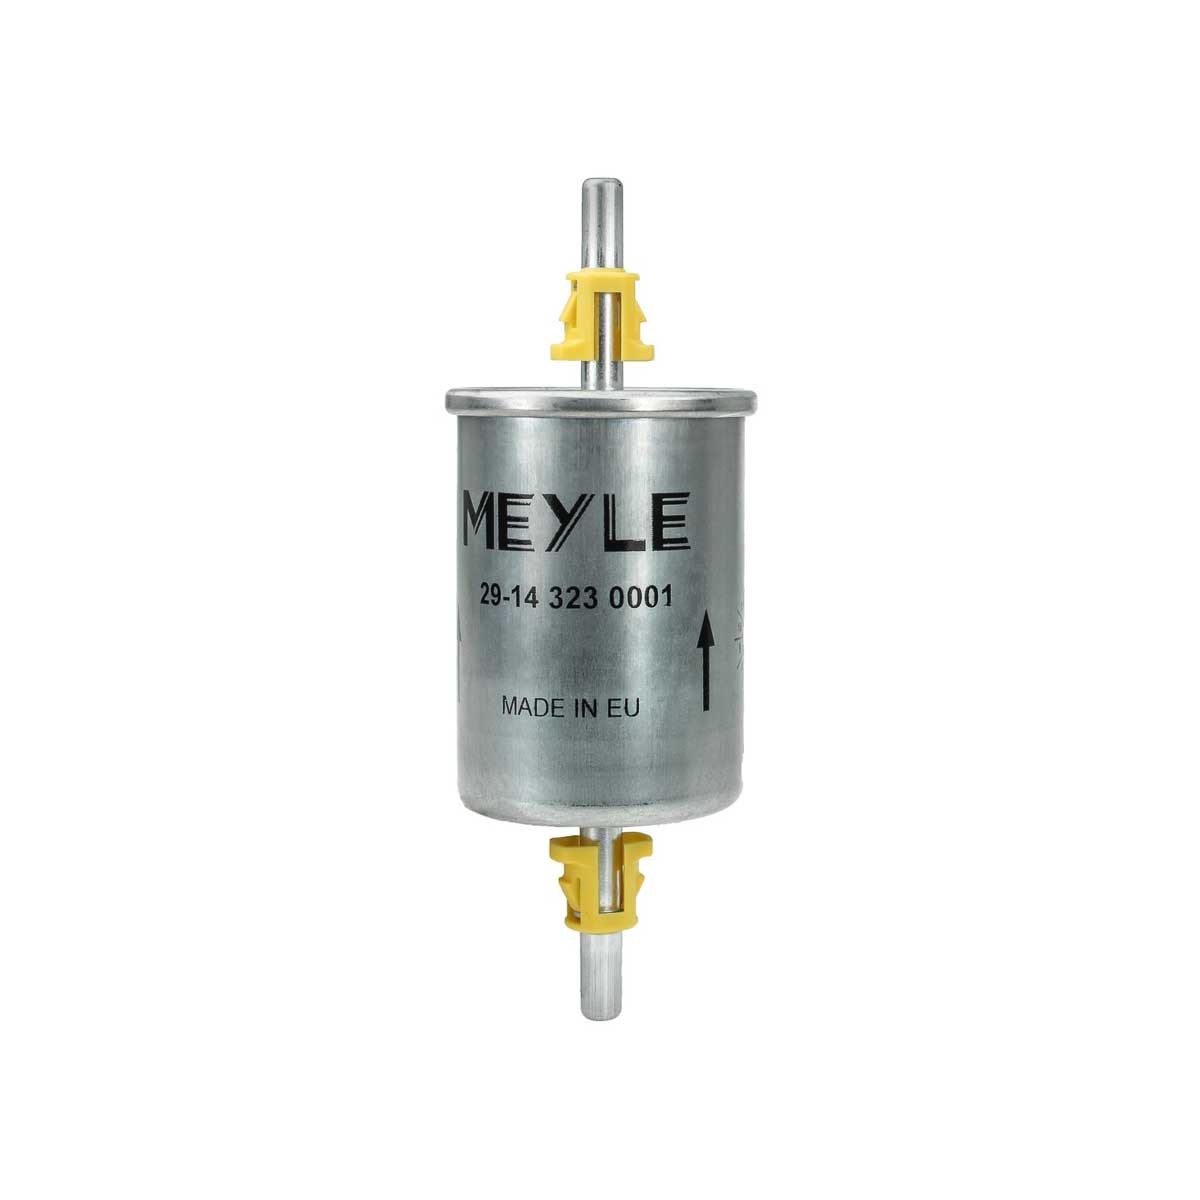 MEYLE 29-14 323 0001 Fuel filter In-Line Filter, ORIGINAL Quality